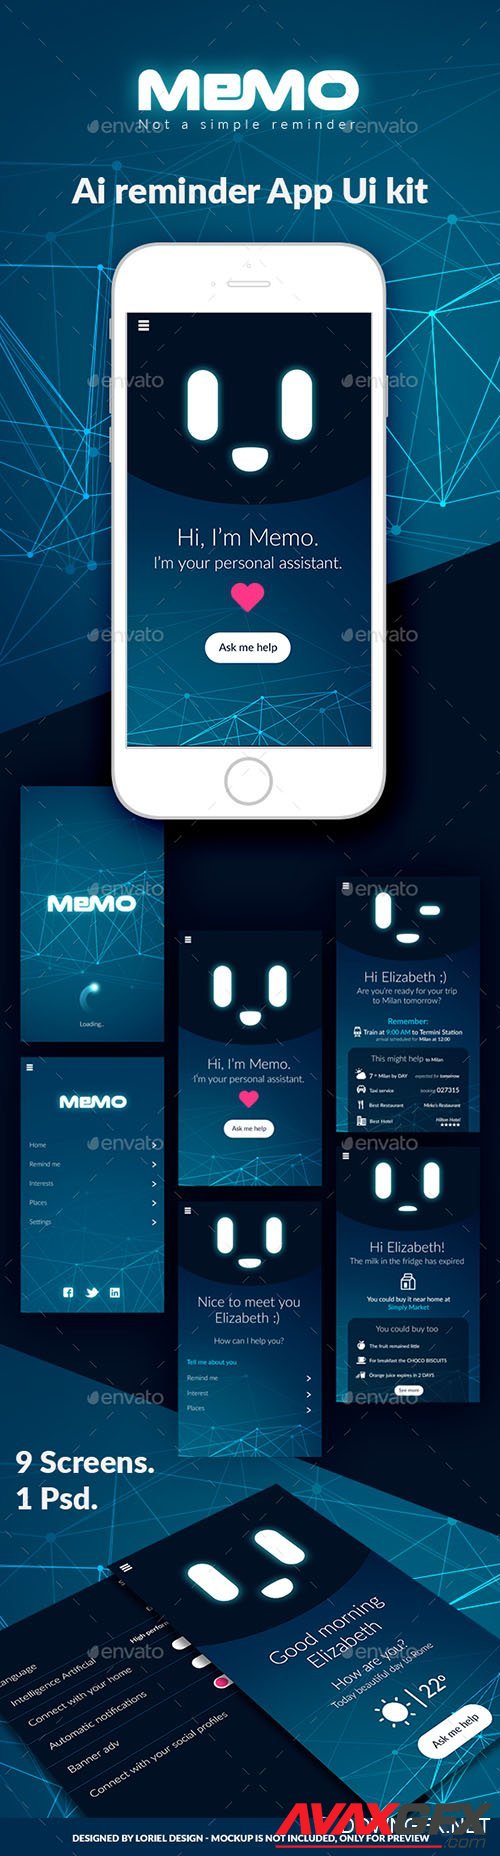 Graphicriver - Memo - Mobile AI Reminder App Ui kit 21297734